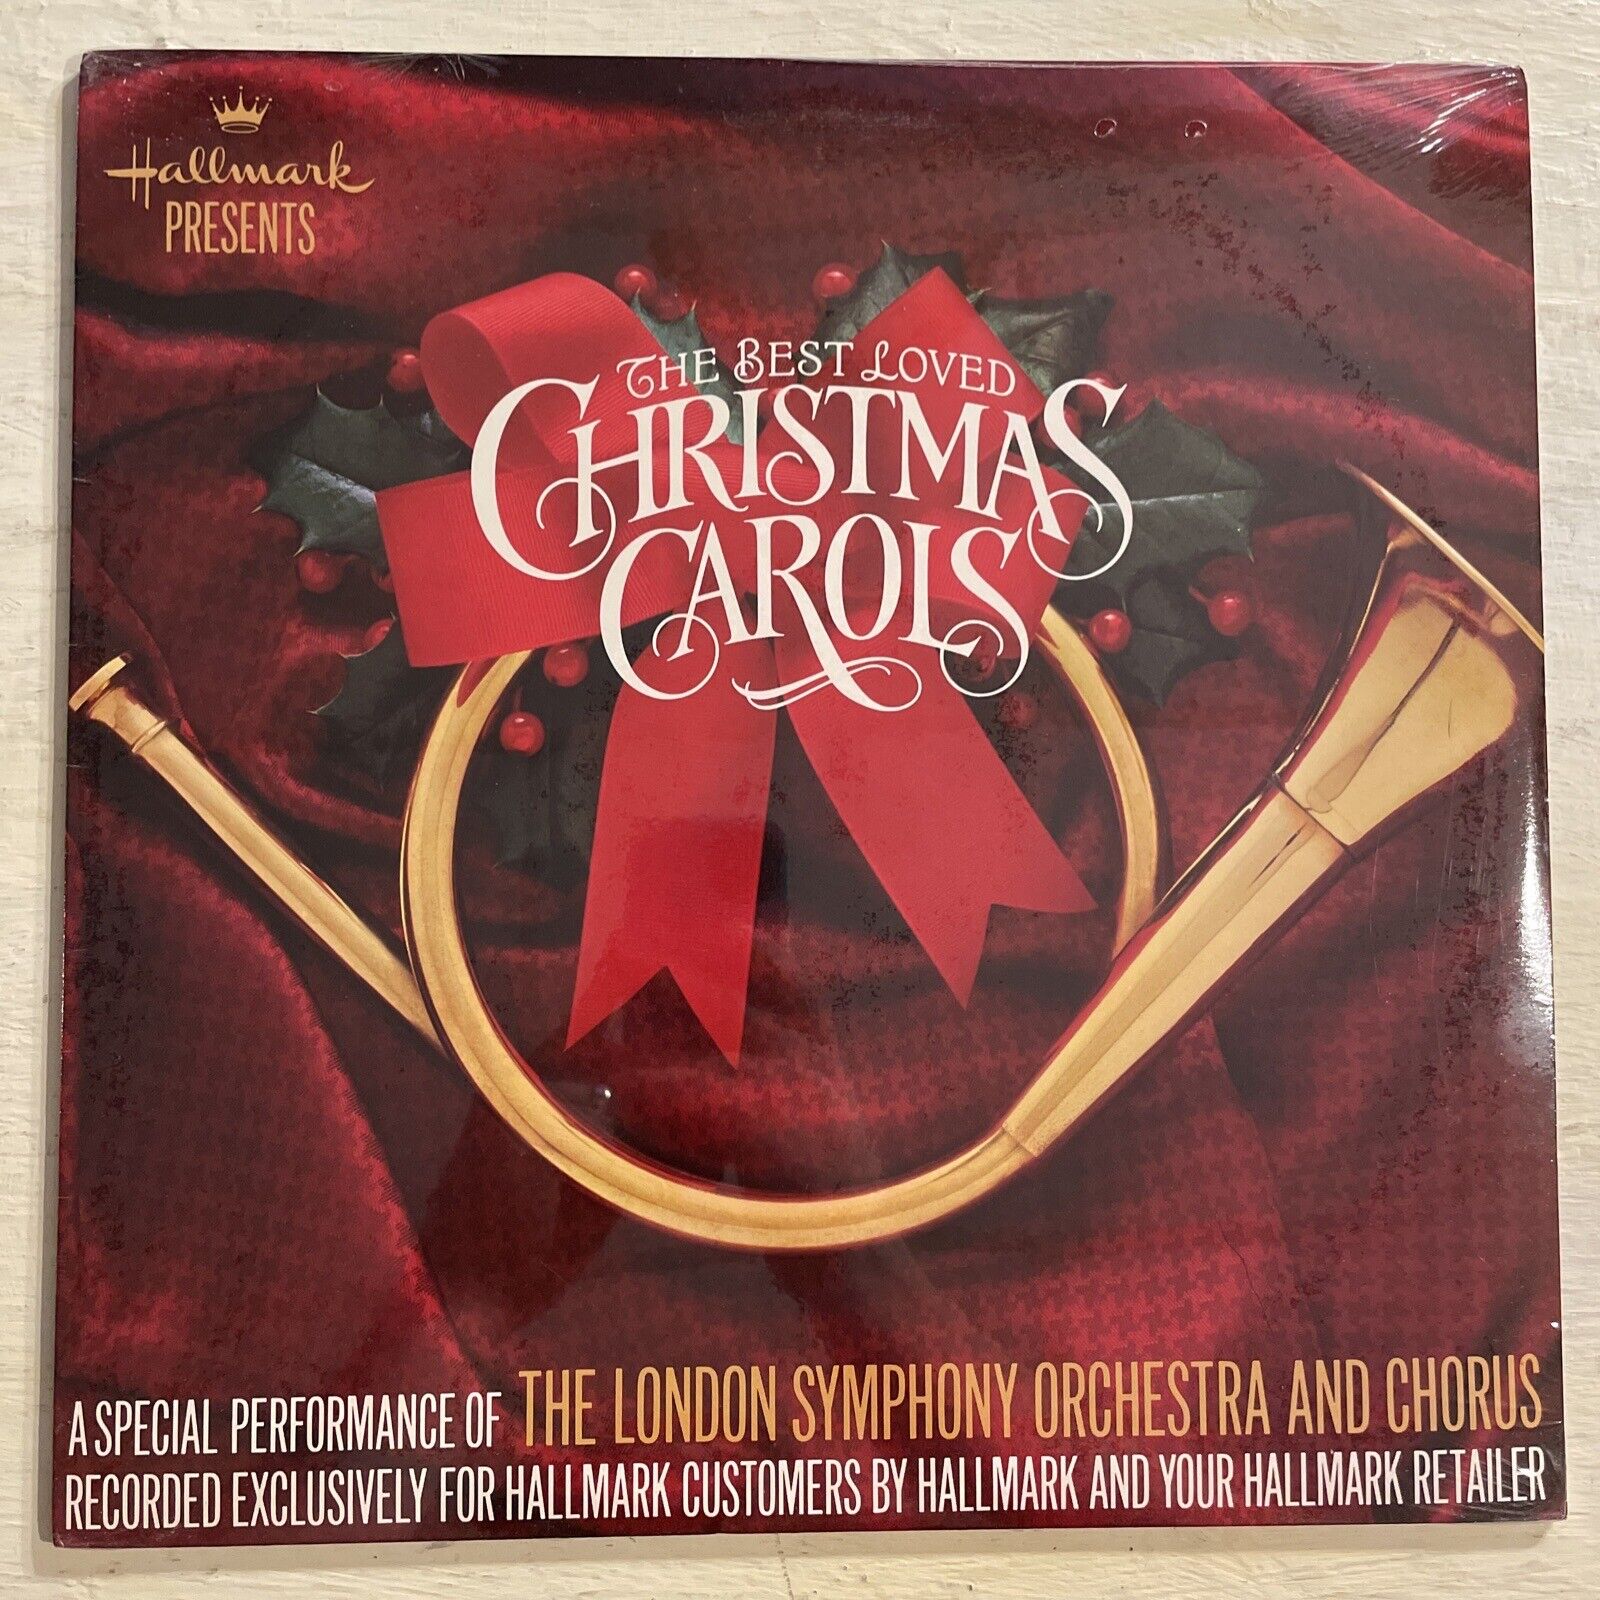 Hallmark Presents The Best Loved Christmas Carols LSO LP Hallmark Holiday SEALED